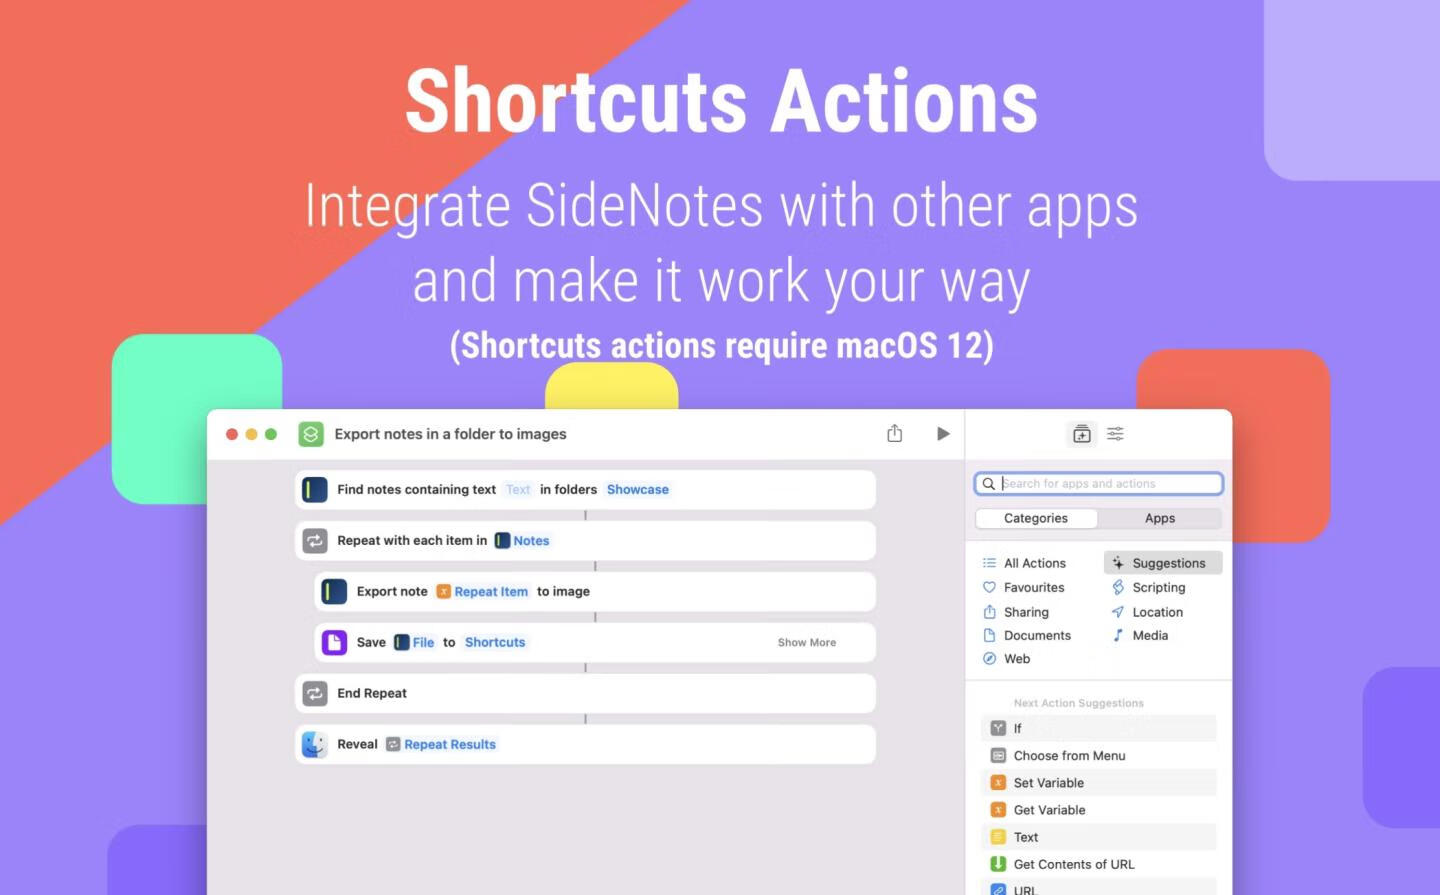 SideNotes v1.4.12 for Mac 让你随时在 Mac 屏幕上管理笔记